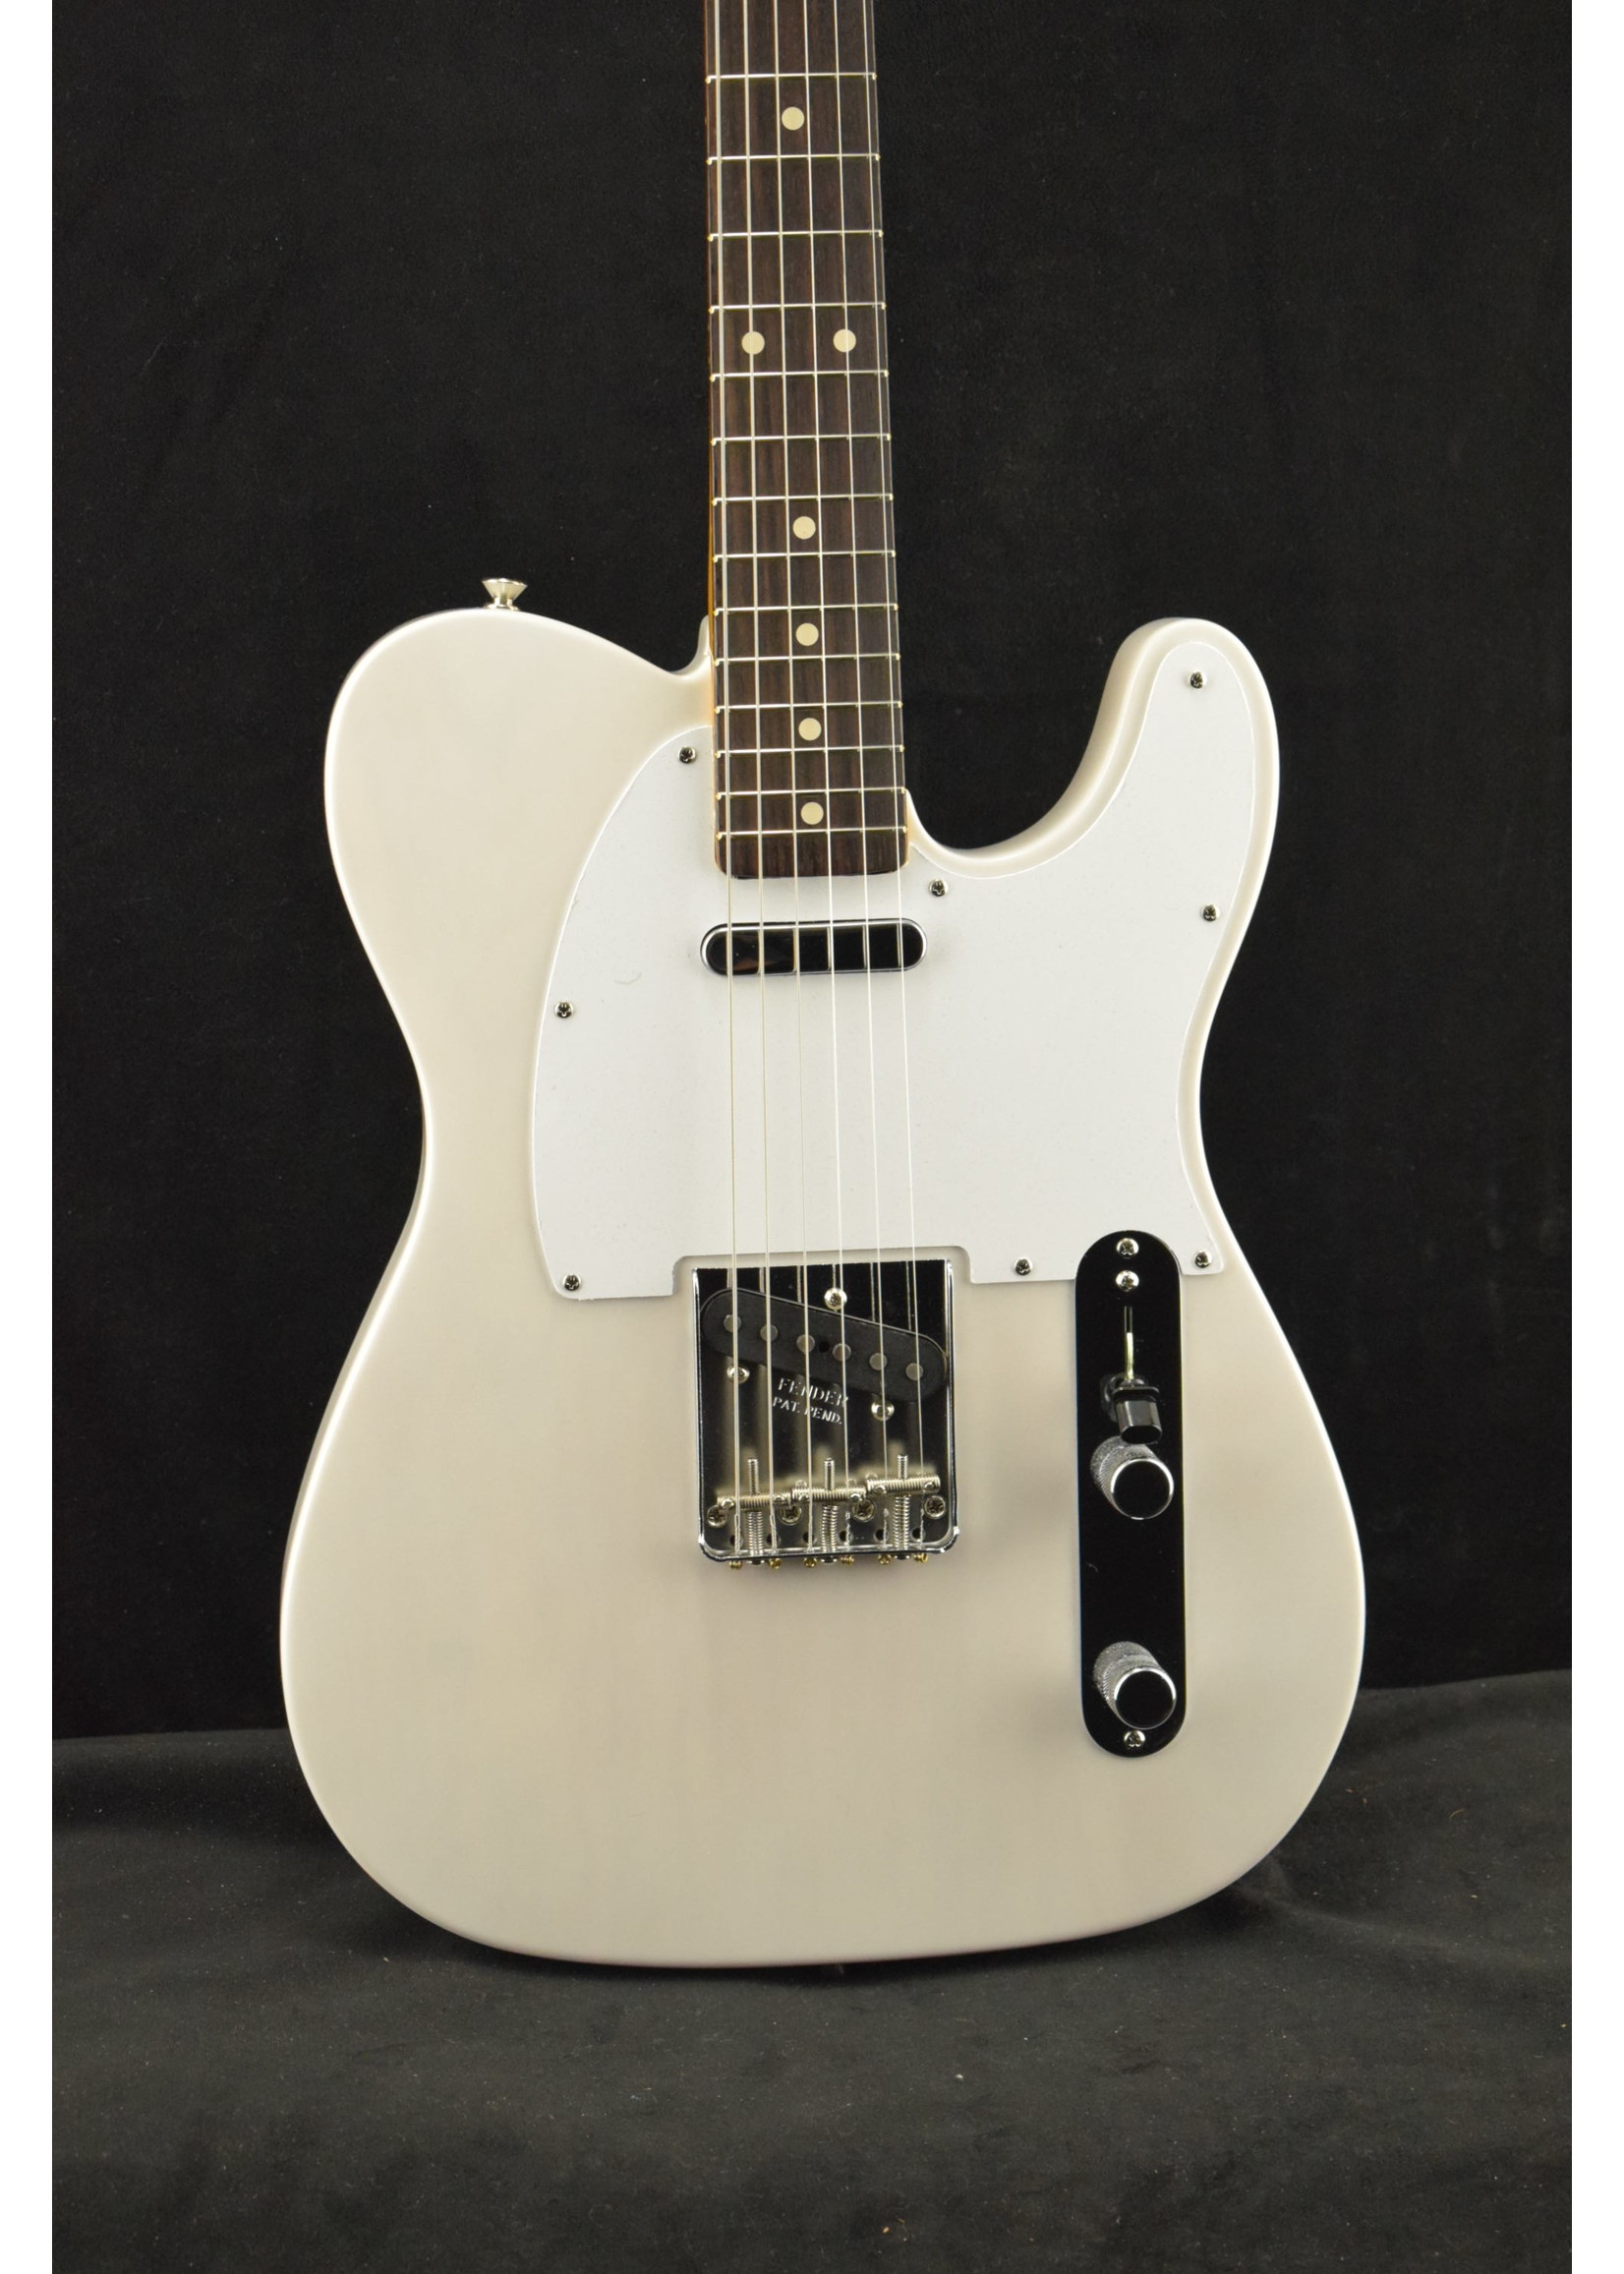 Fender Fender Jimmy Page Mirror Telecaster White Blonde